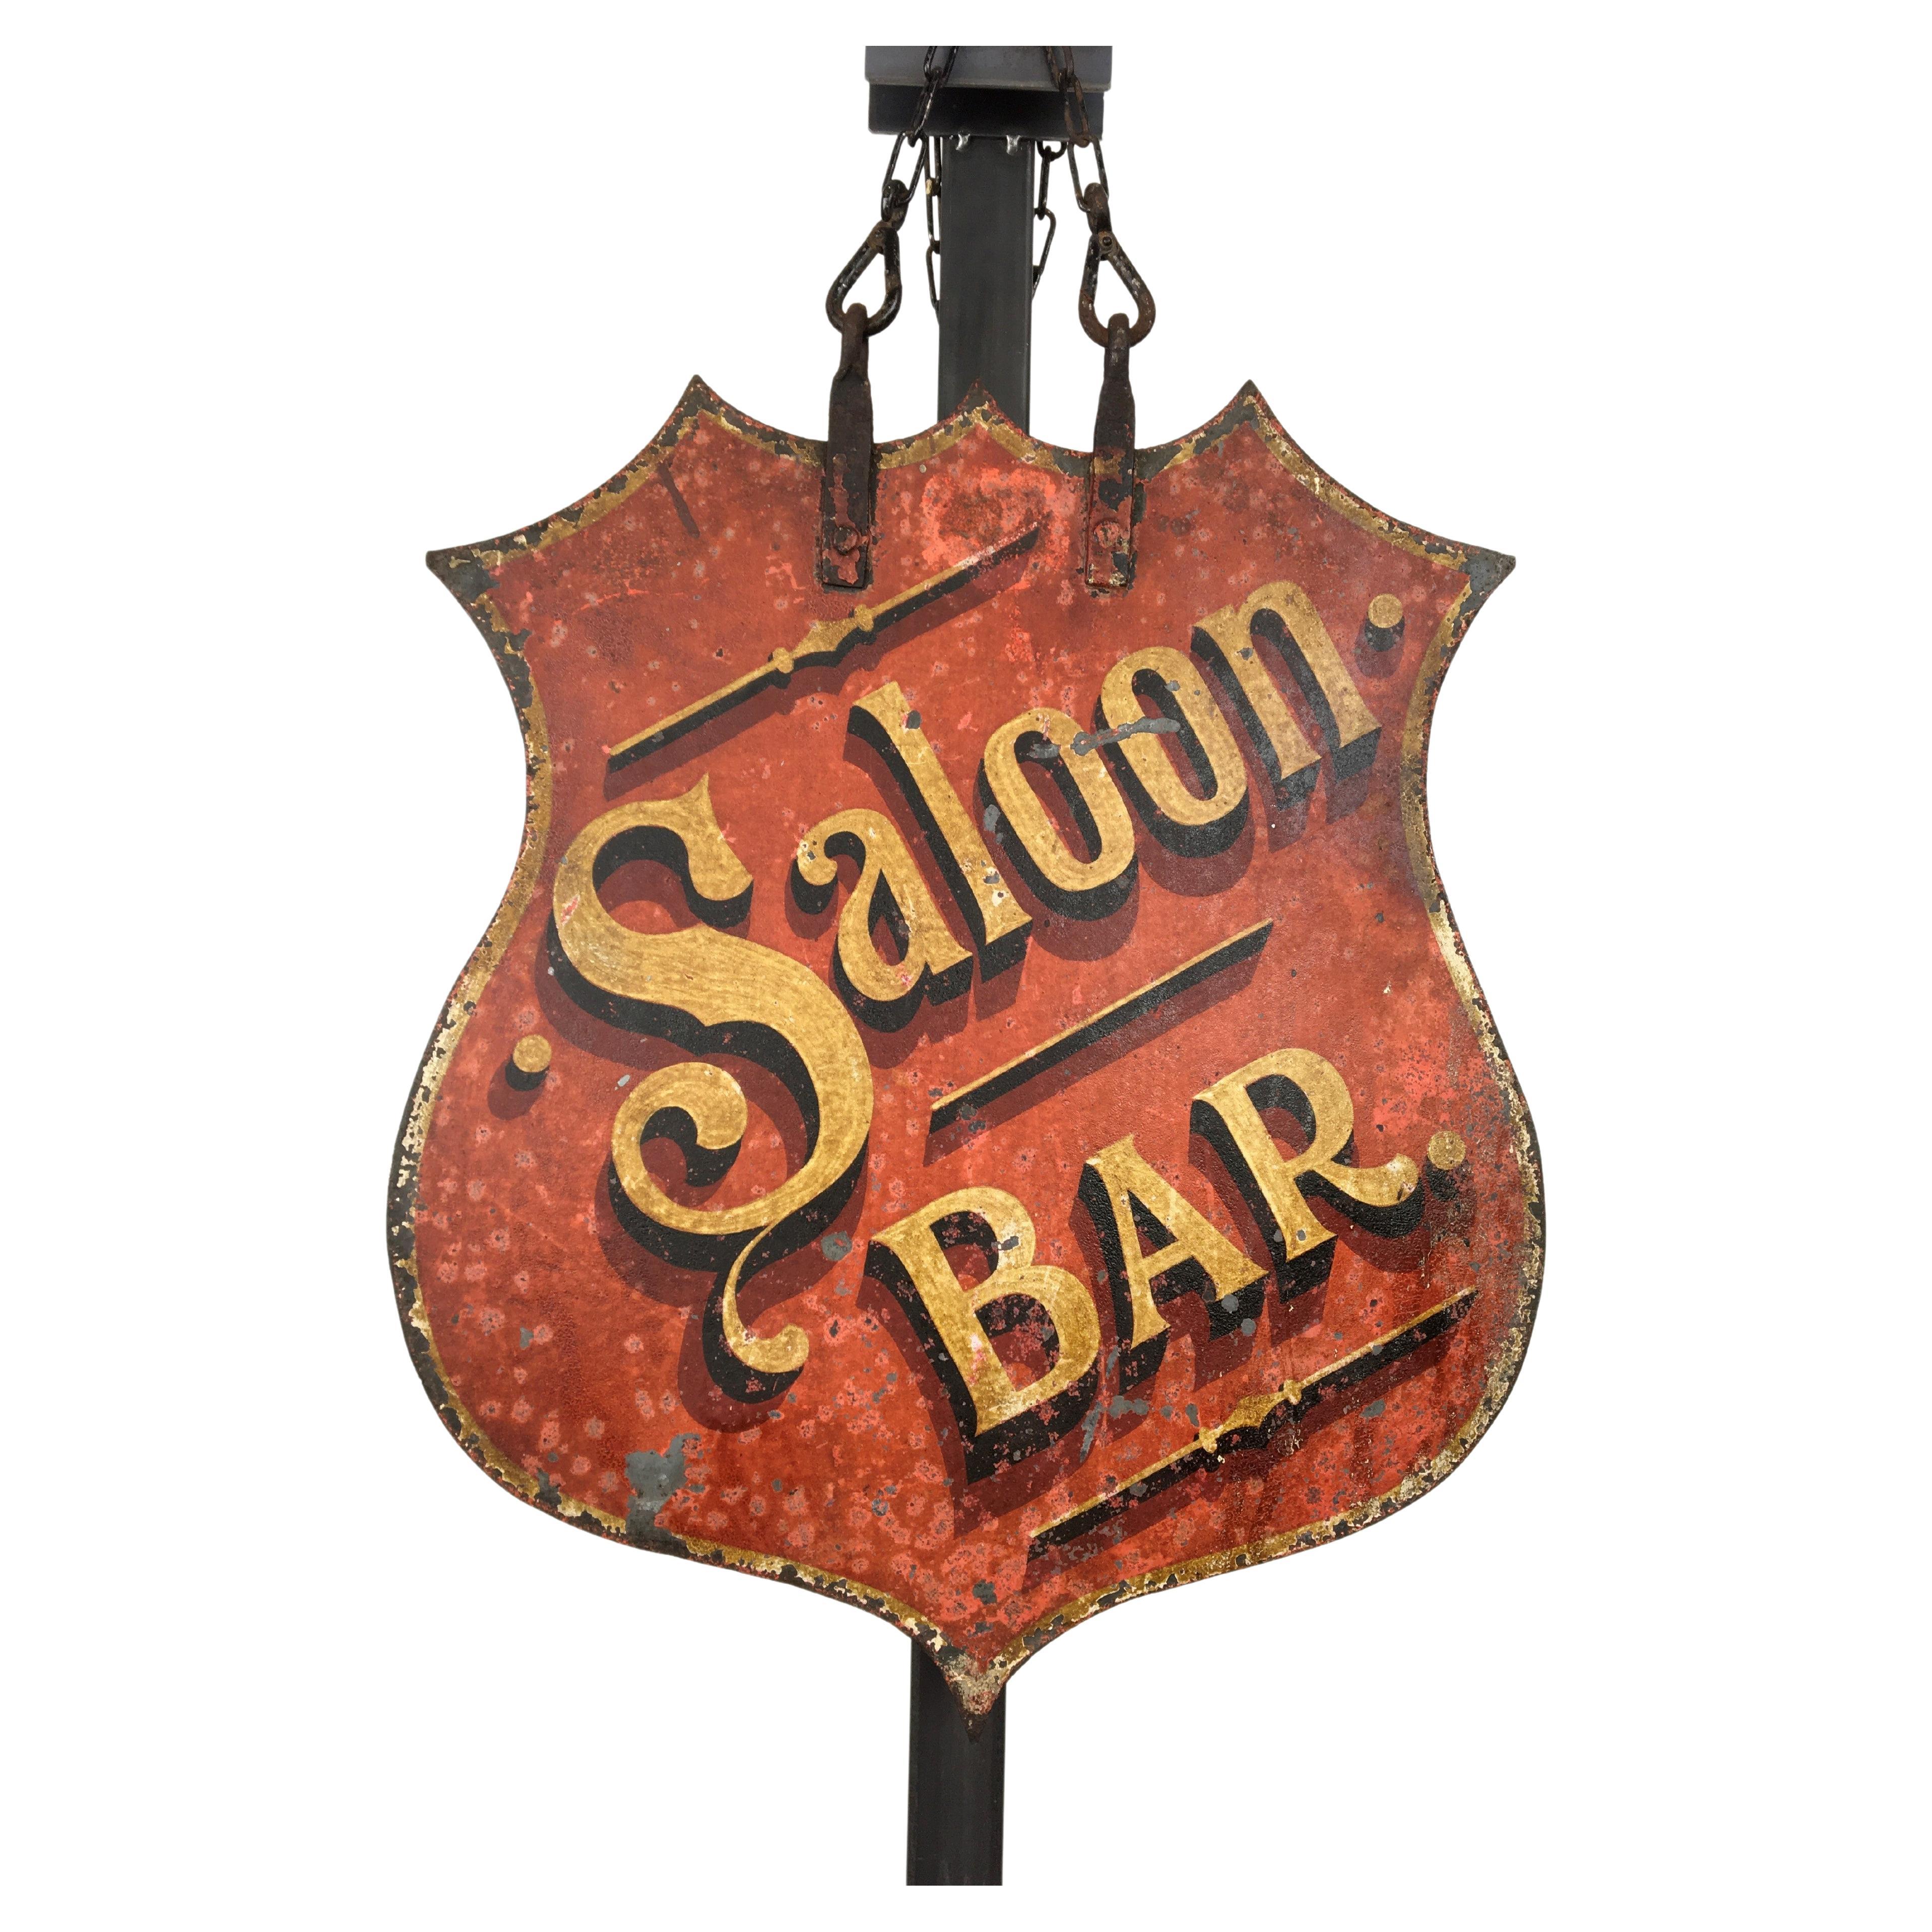 Antique Saloon Bar Pub Sign